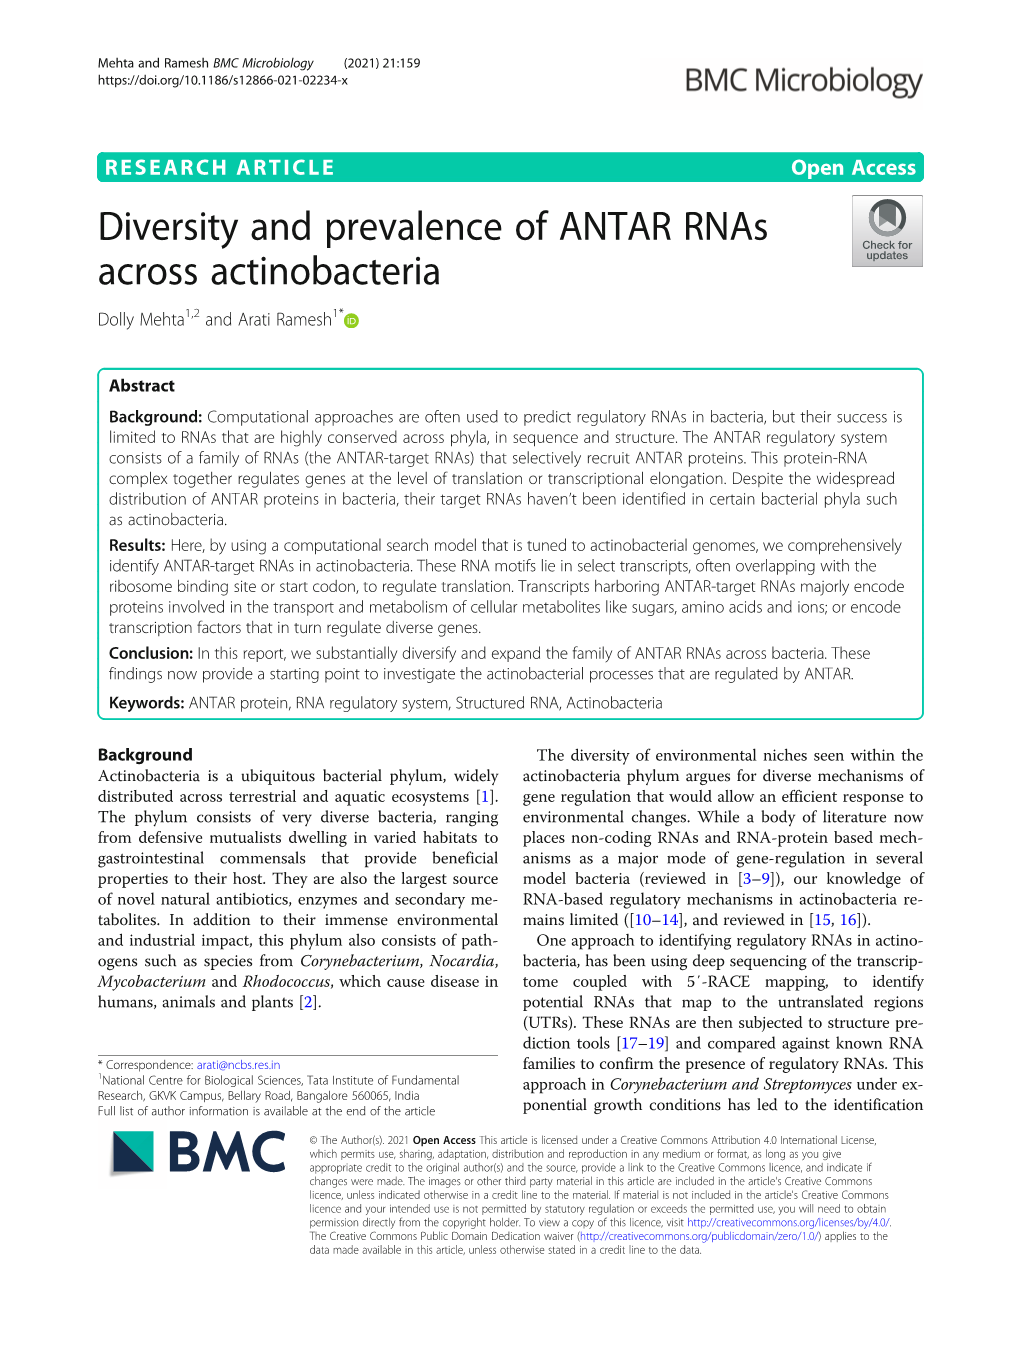 Diversity and Prevalence of ANTAR Rnas Across Actinobacteria Dolly Mehta1,2 and Arati Ramesh1*